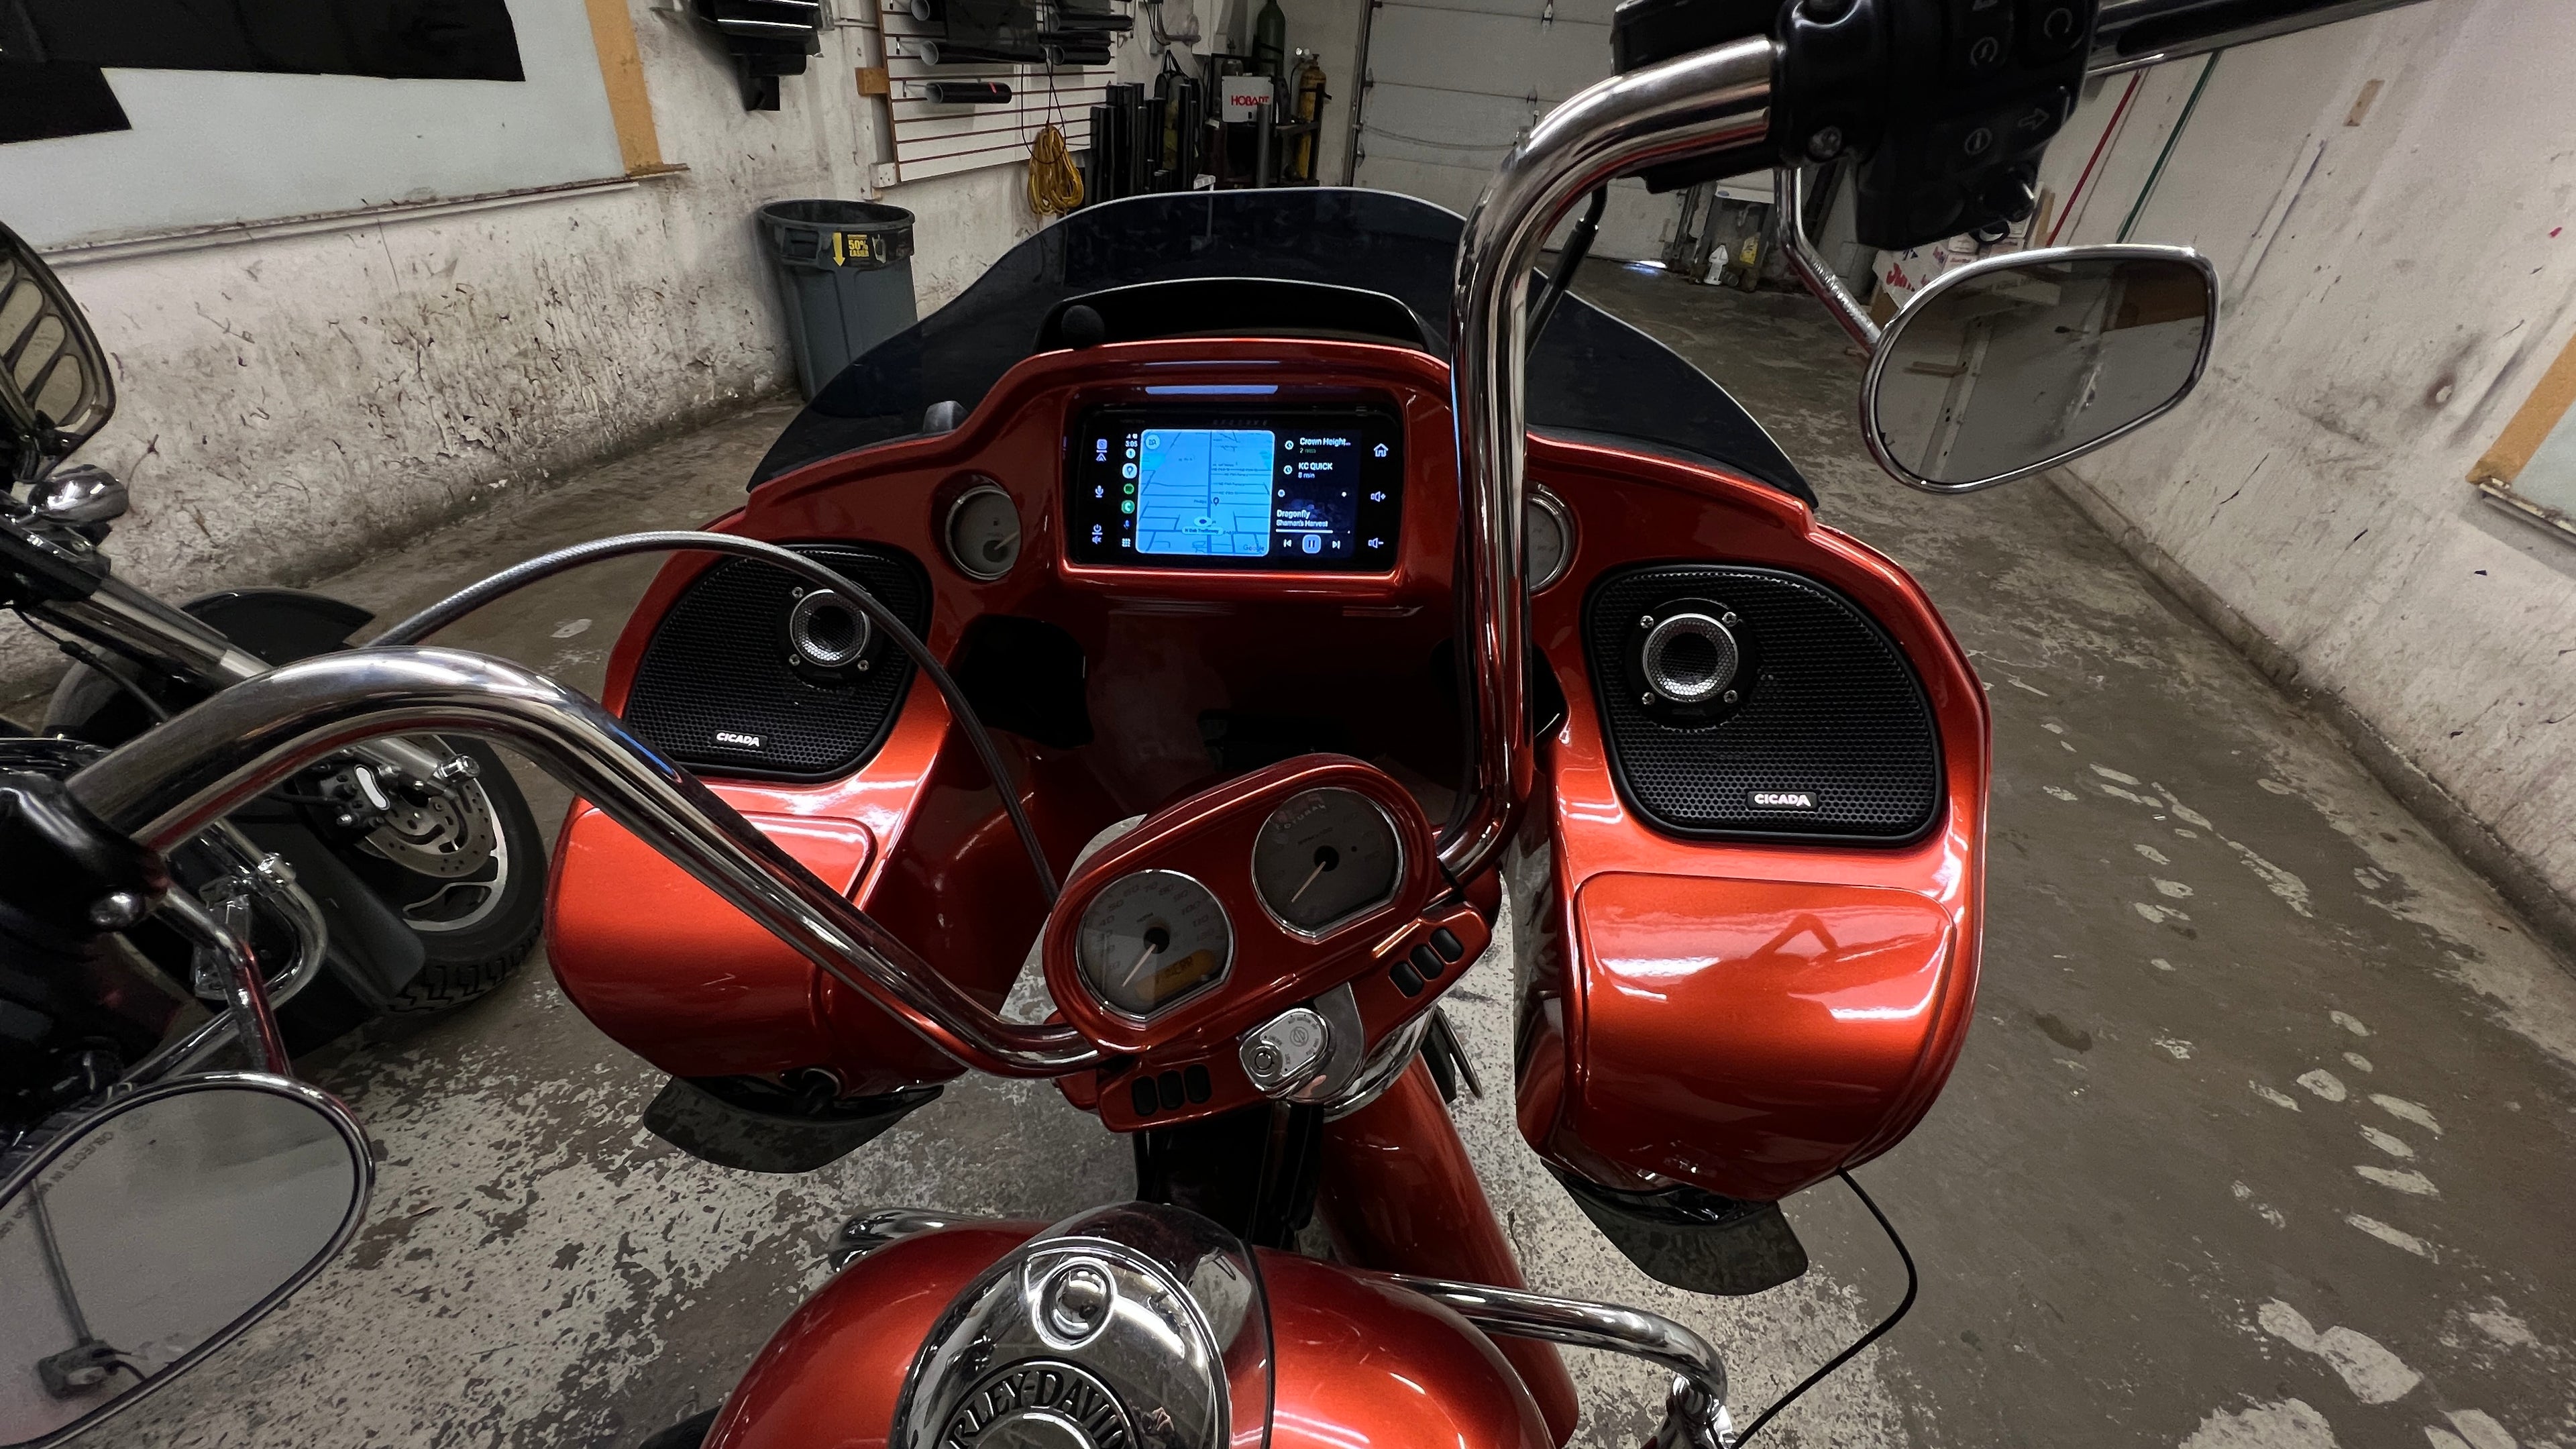 Motorcycle audio. Harley Davidson with Cicada speakers